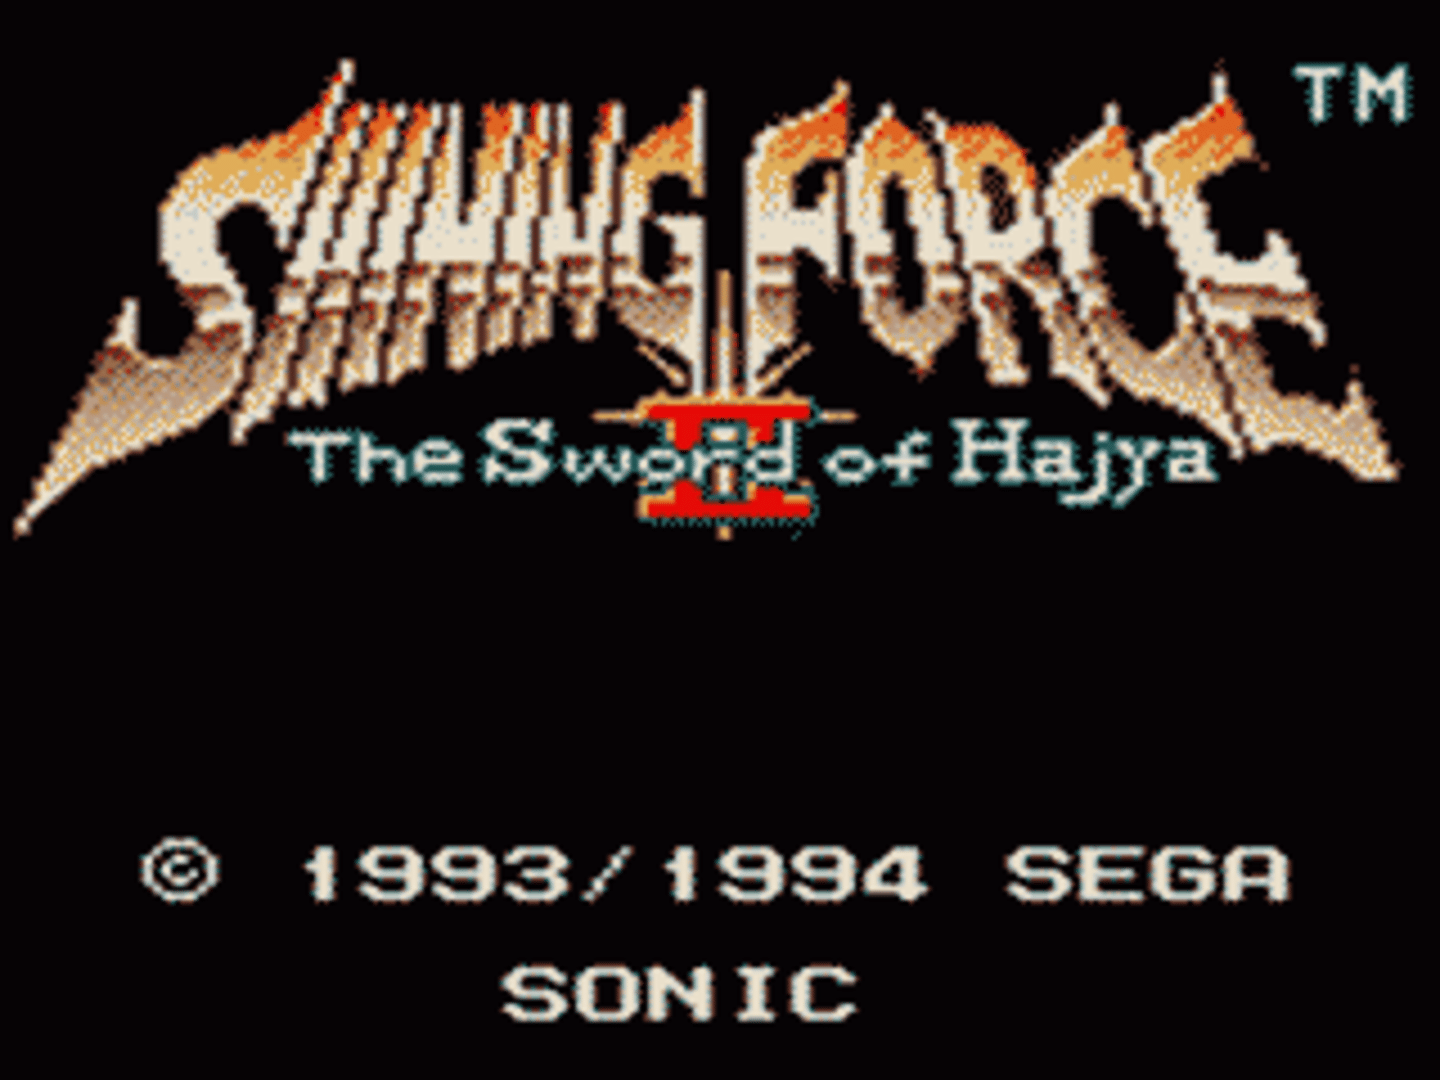 Shining Force: The Sword of Hajya screenshot